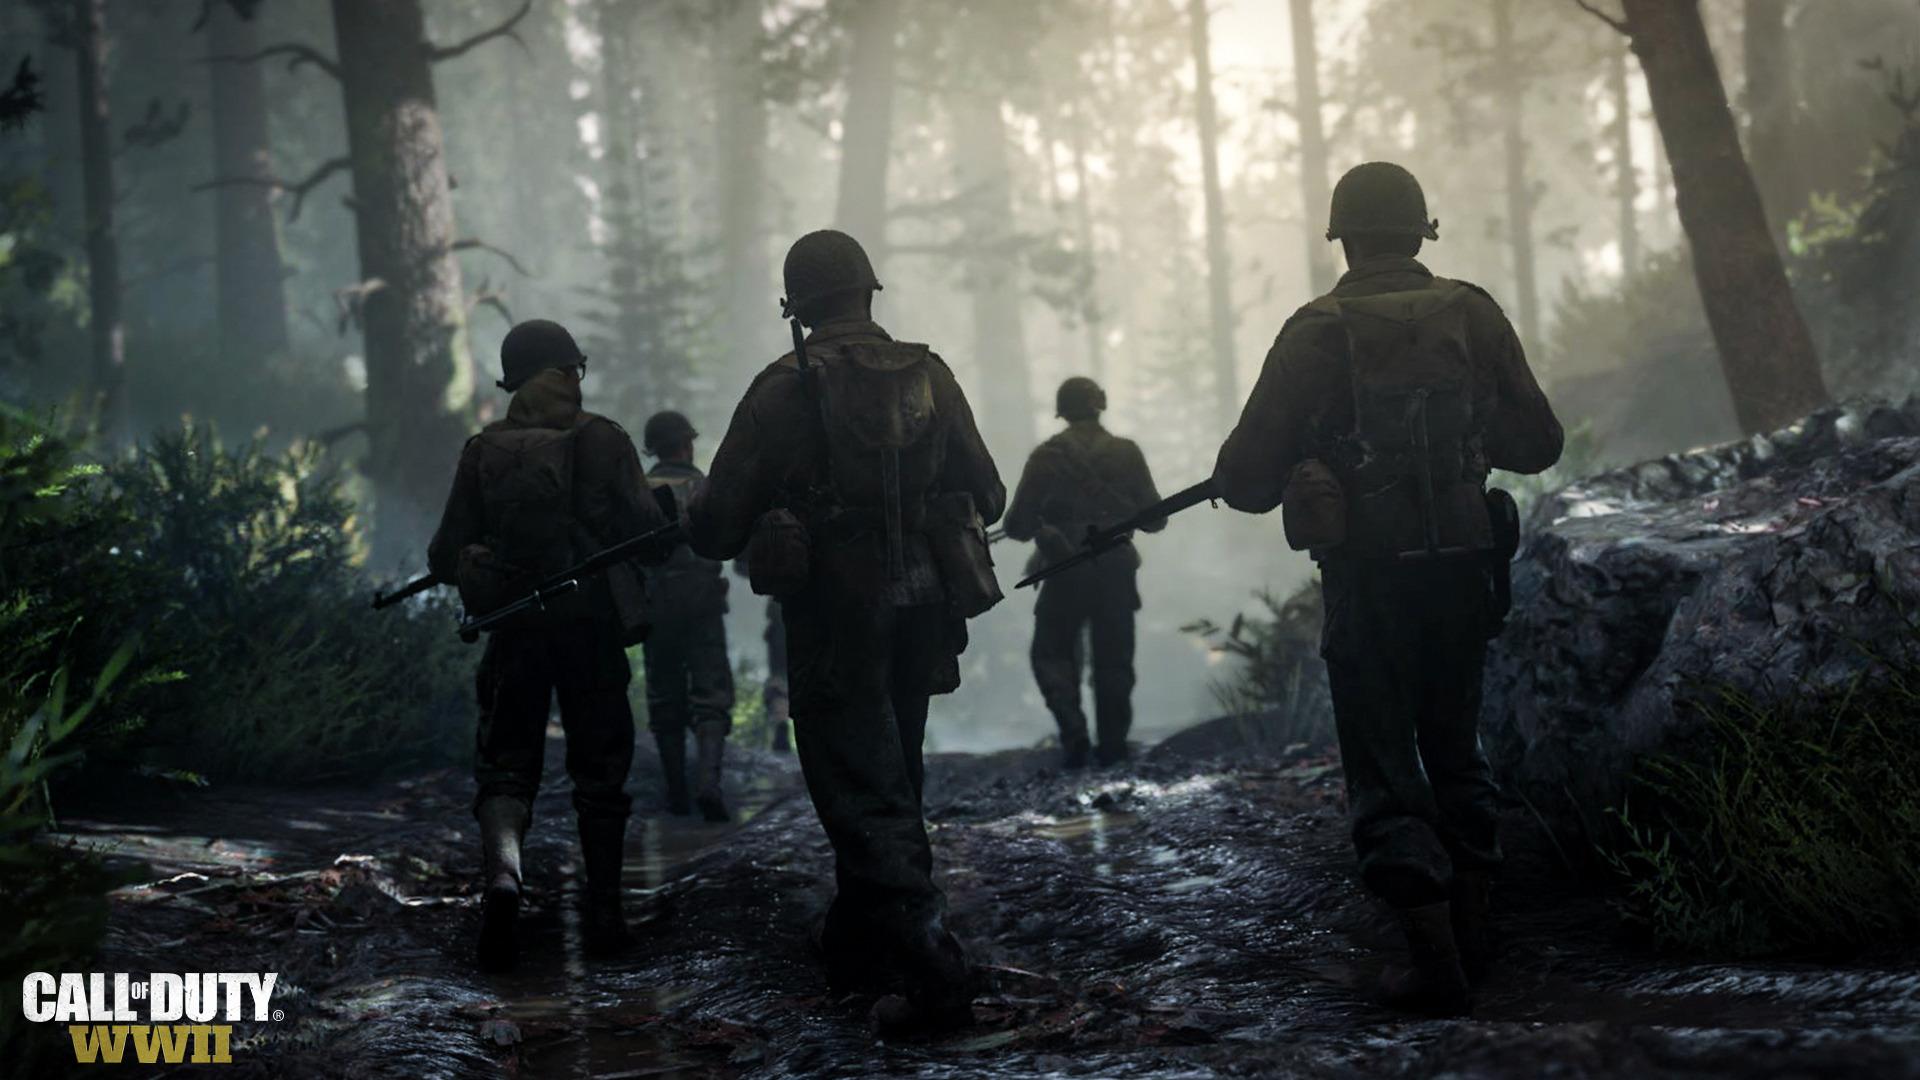 Review: Call of Duty World War II